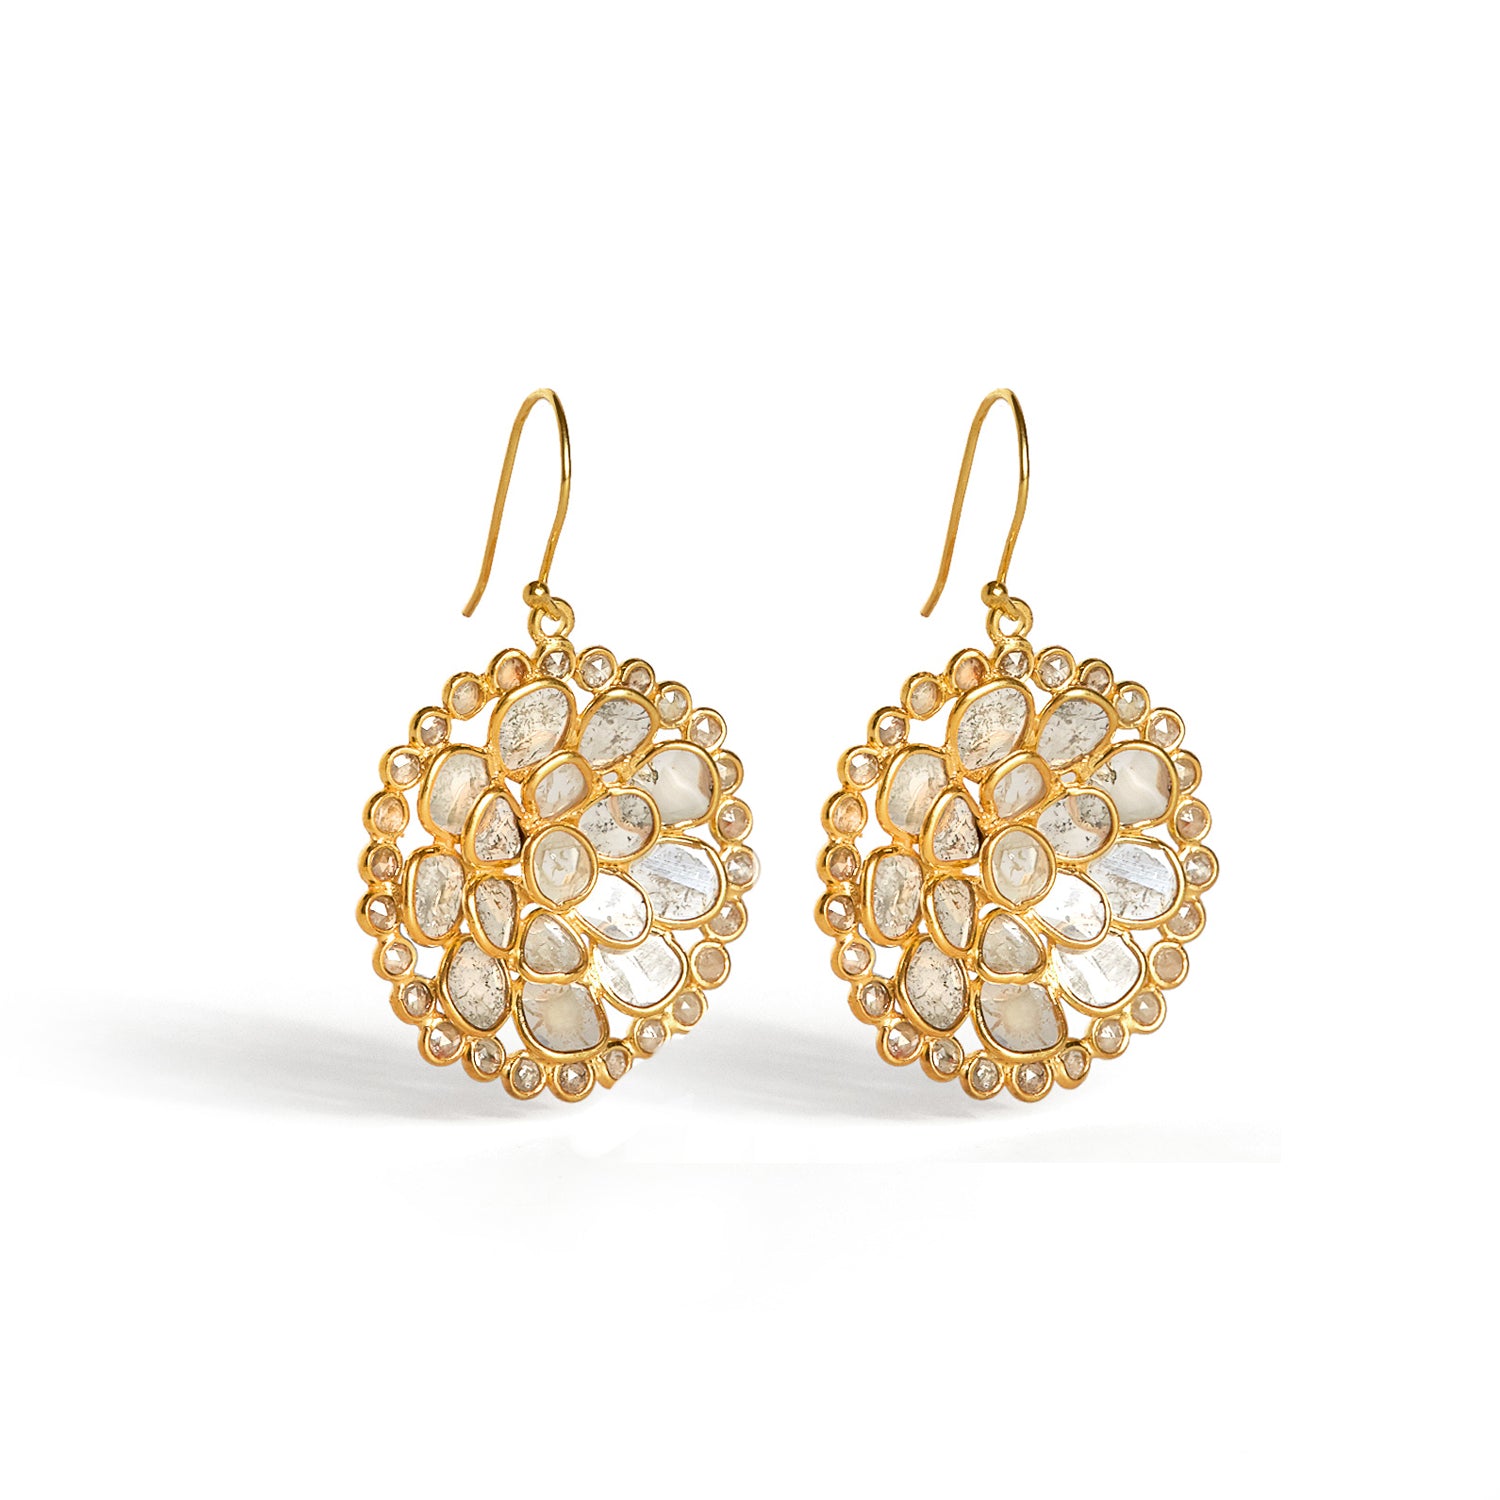 Diaphanous Cirque Rose Cut Diamond Earrings-Earrings-Jaipur Atelier